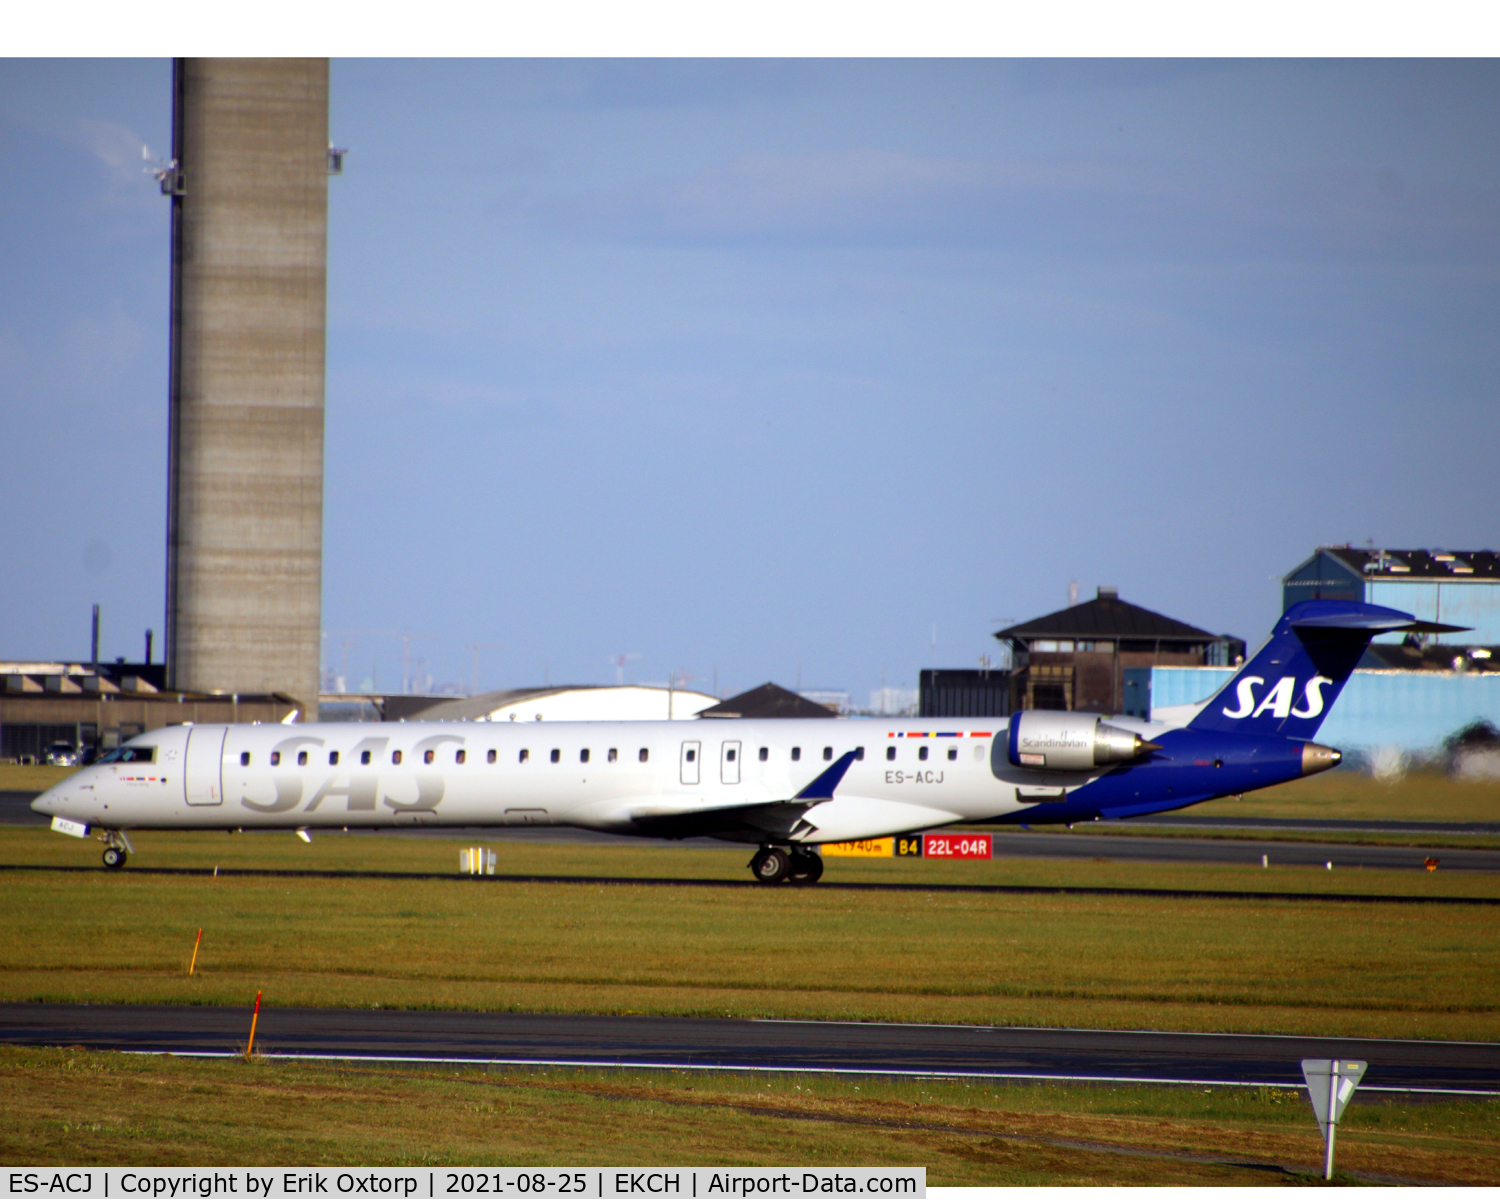 ES-ACJ, 2010 Bombardier CRJ-900LR (CL-600-2D24) C/N 15250, ES-ACJ landed rw 22L